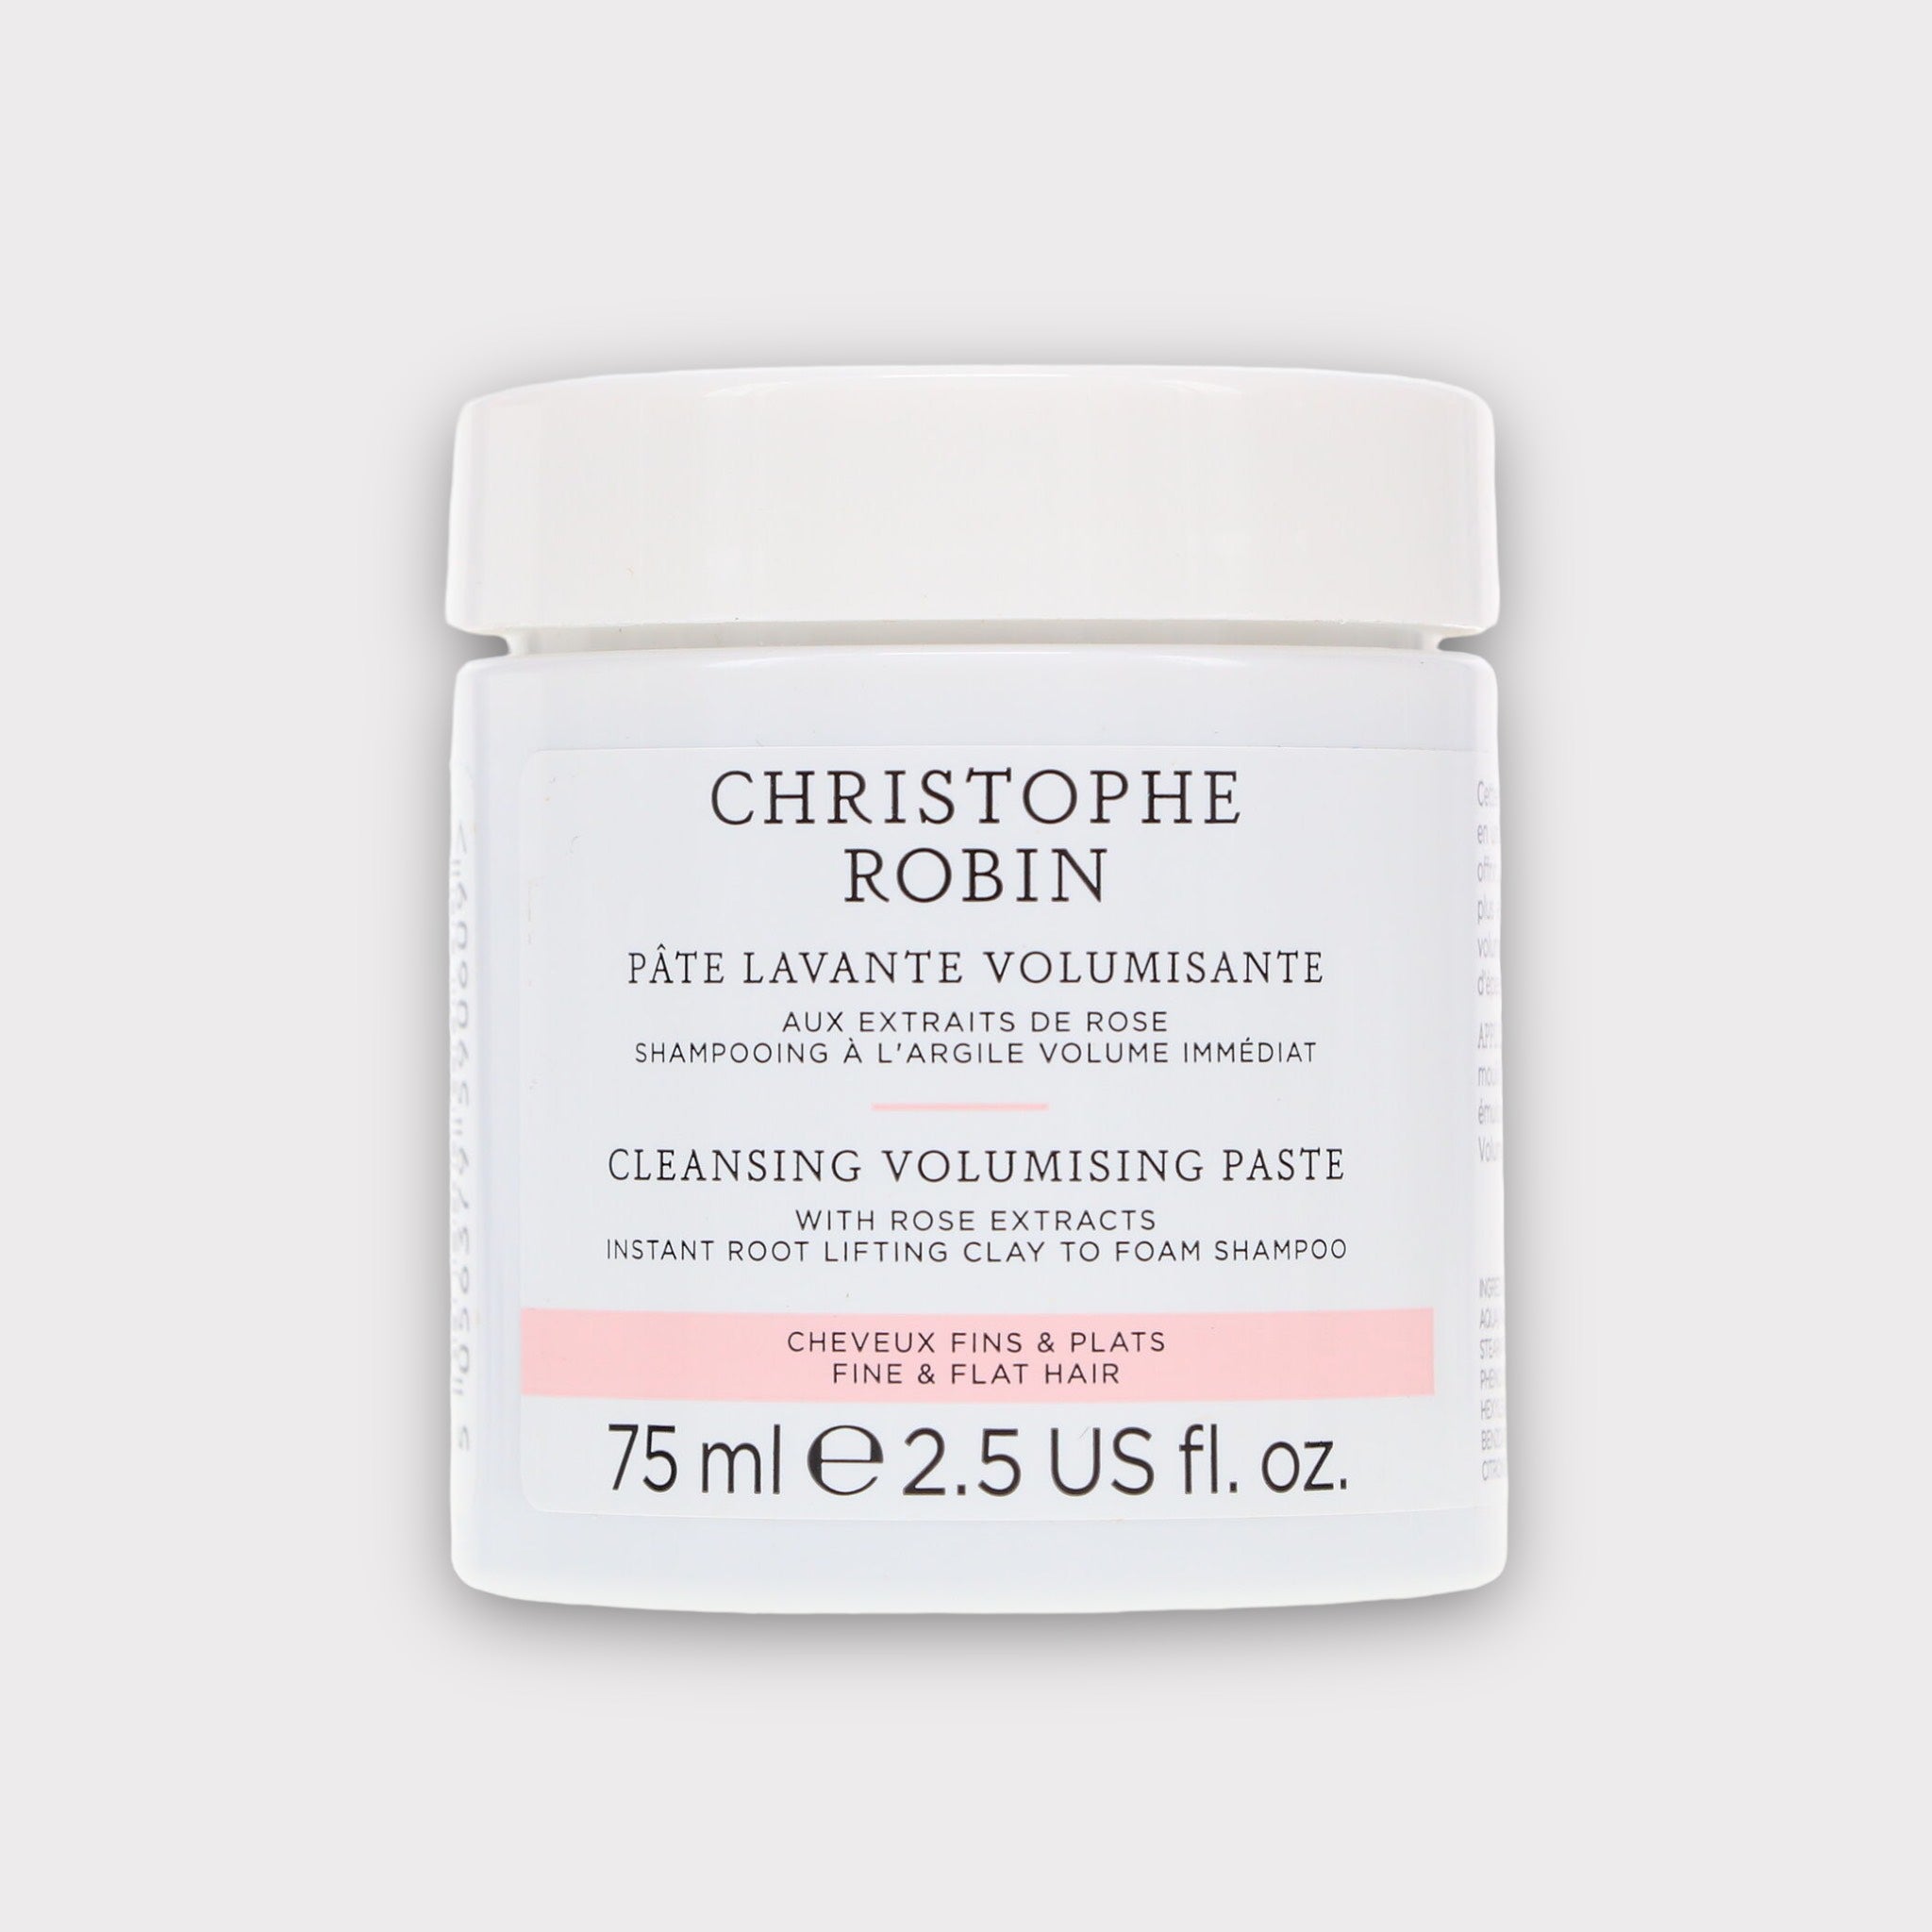 Christophe Robin Cleansing Volumizing Paste